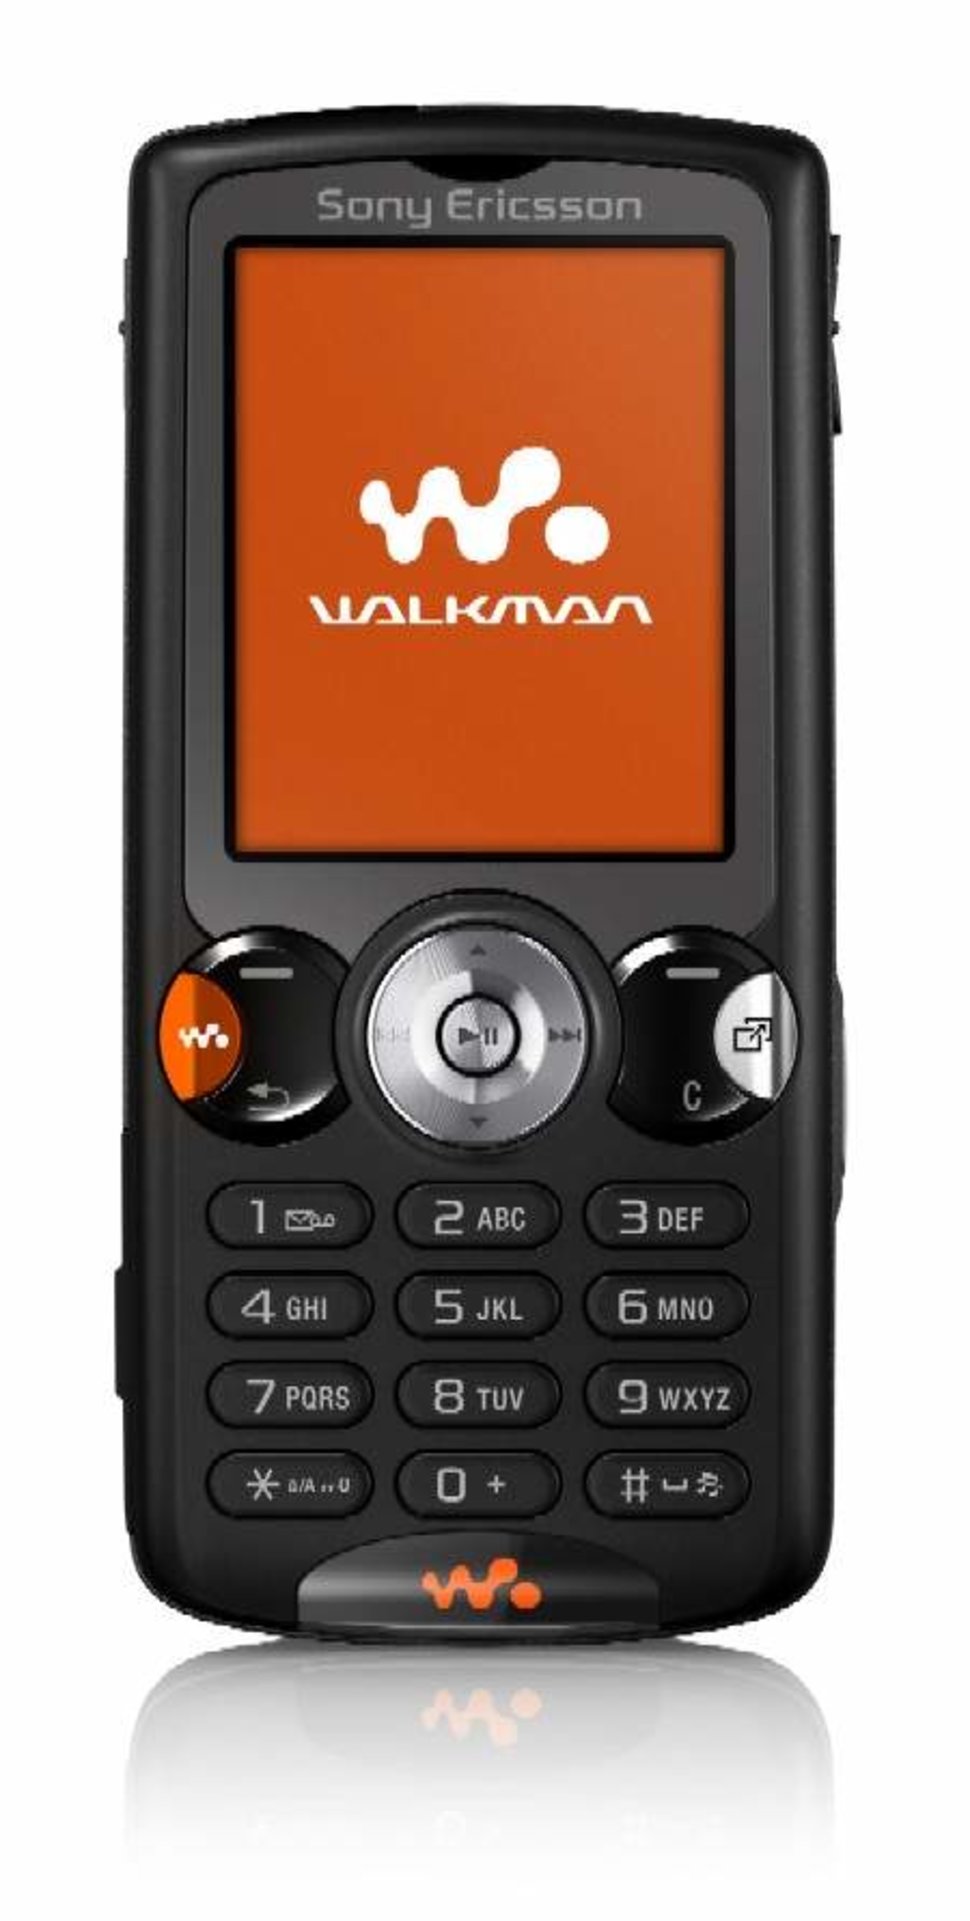 Sony Ericsson Walkman Phone User Manual